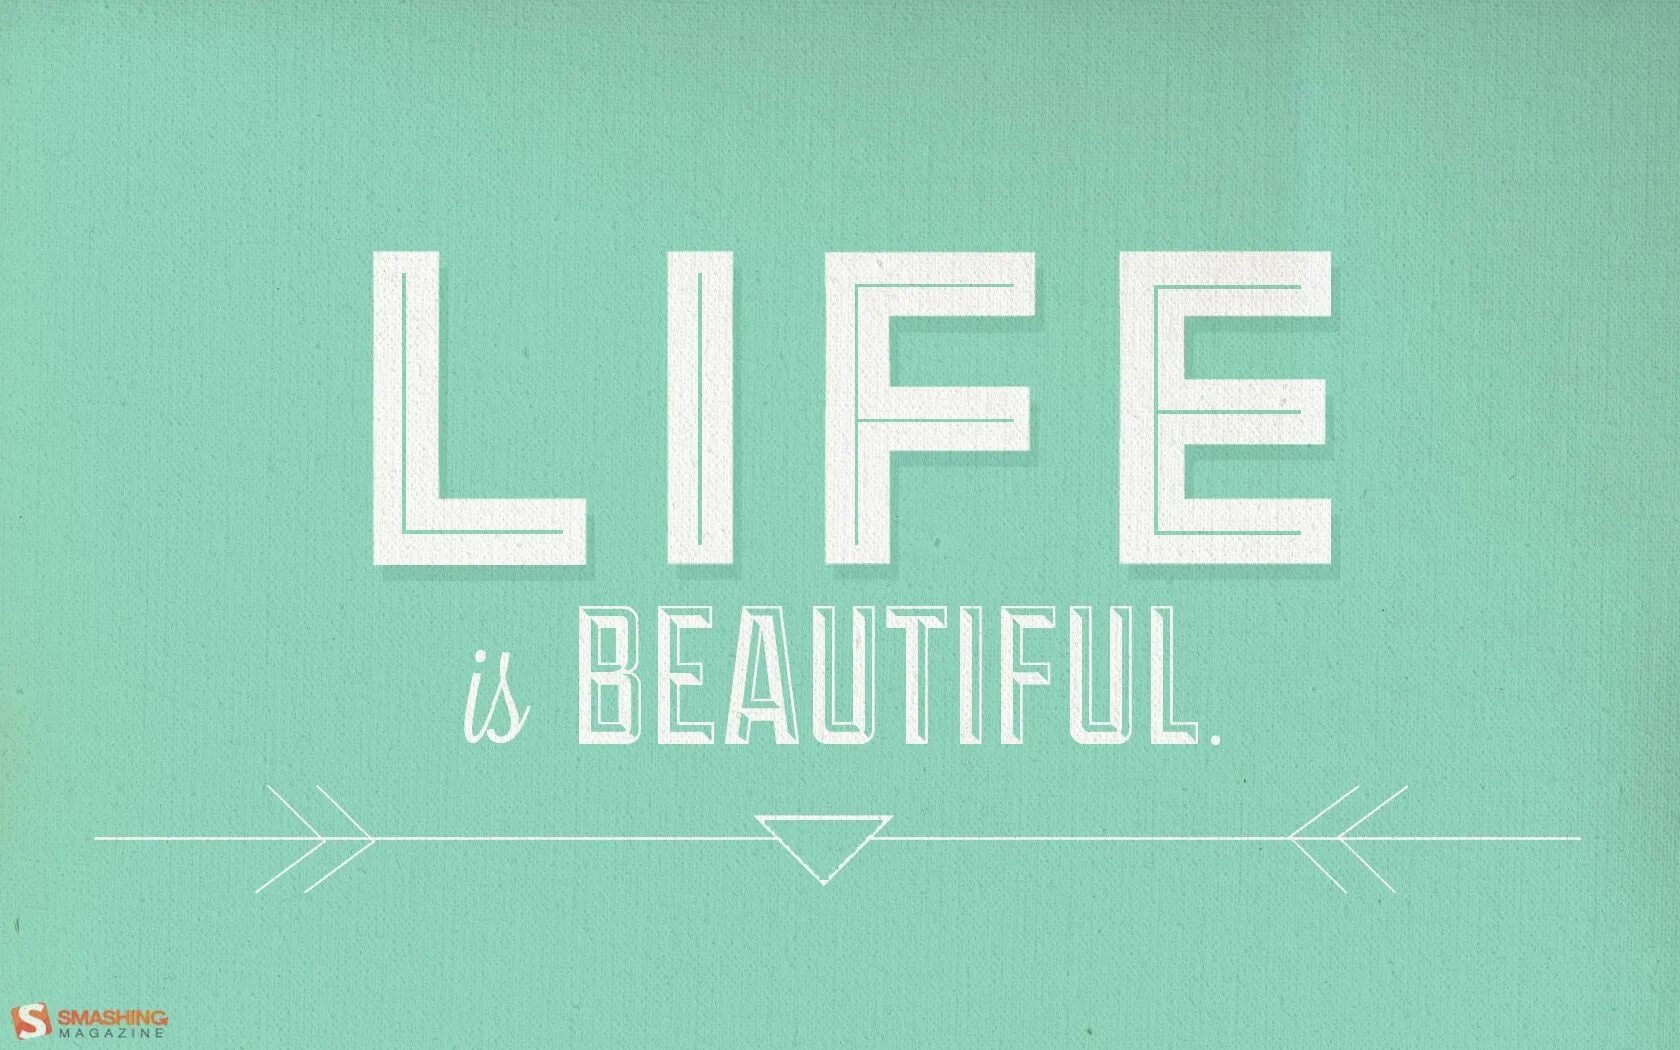 Life is behind. Life надпись. Картинки с надписью Life. Beautiful Life надпись. Life is beautiful картинки.